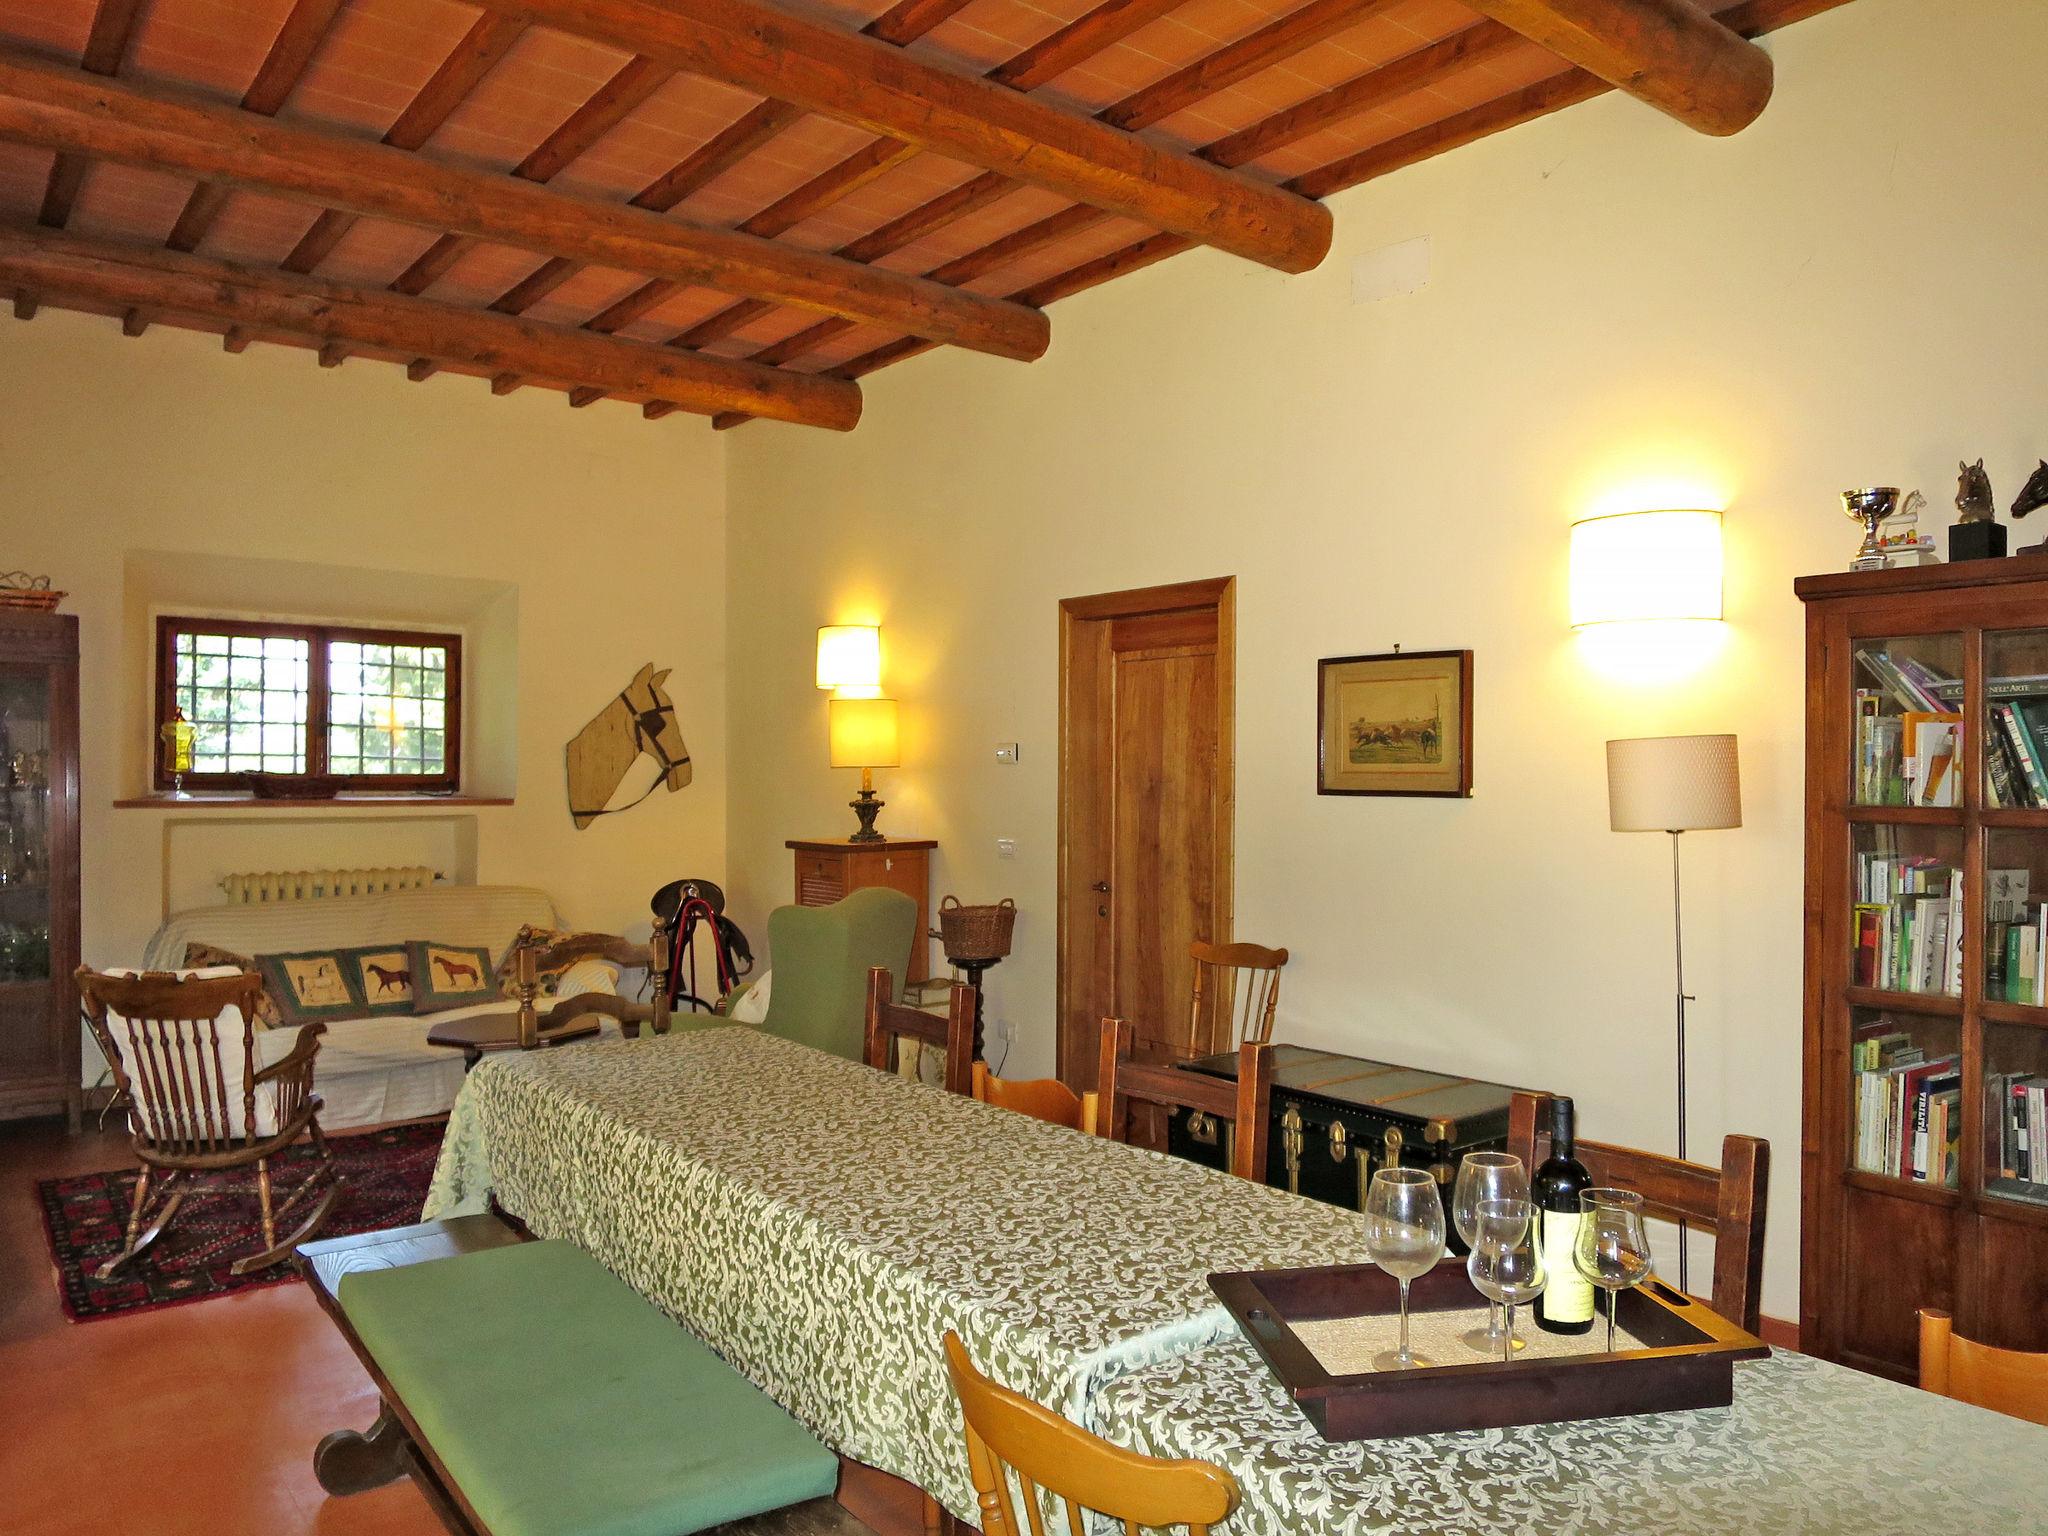 Foto 7 - Haus mit 6 Schlafzimmern in Bagno a Ripoli mit privater pool